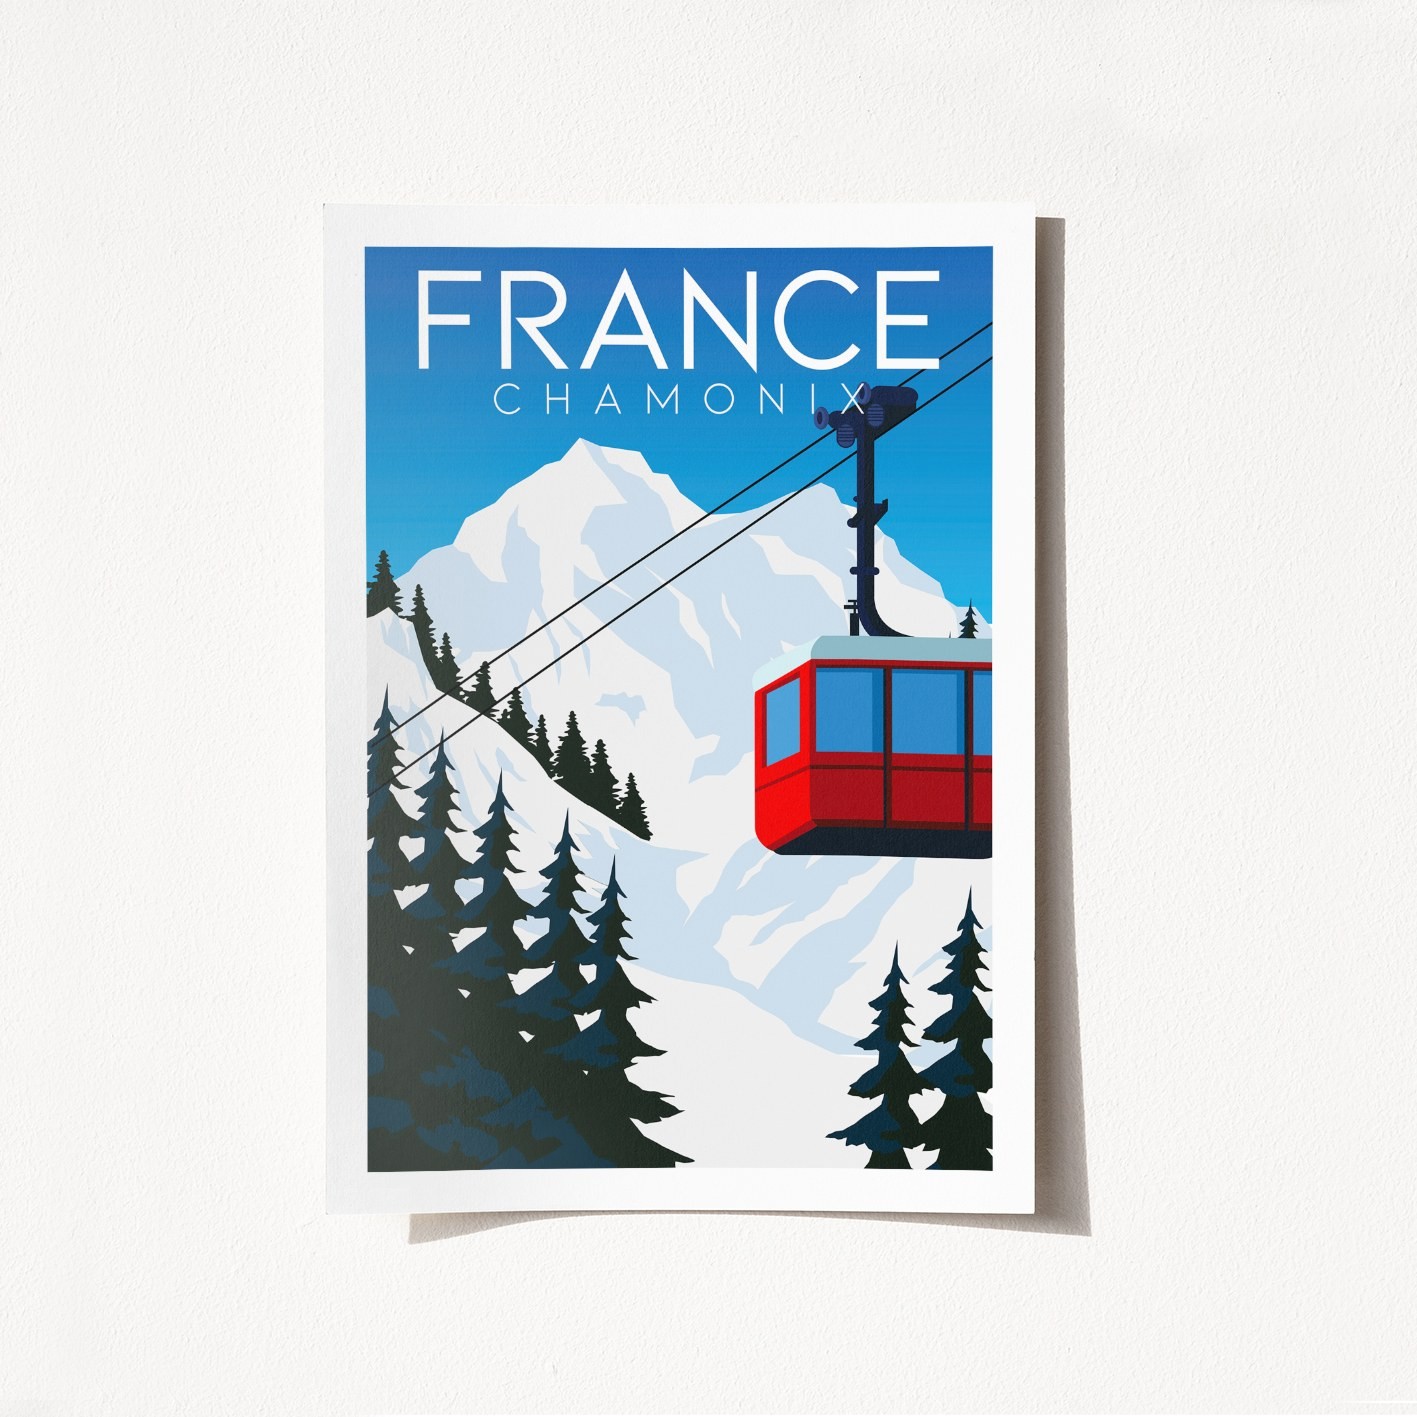 Affiche A3 Chamonix France - 1993